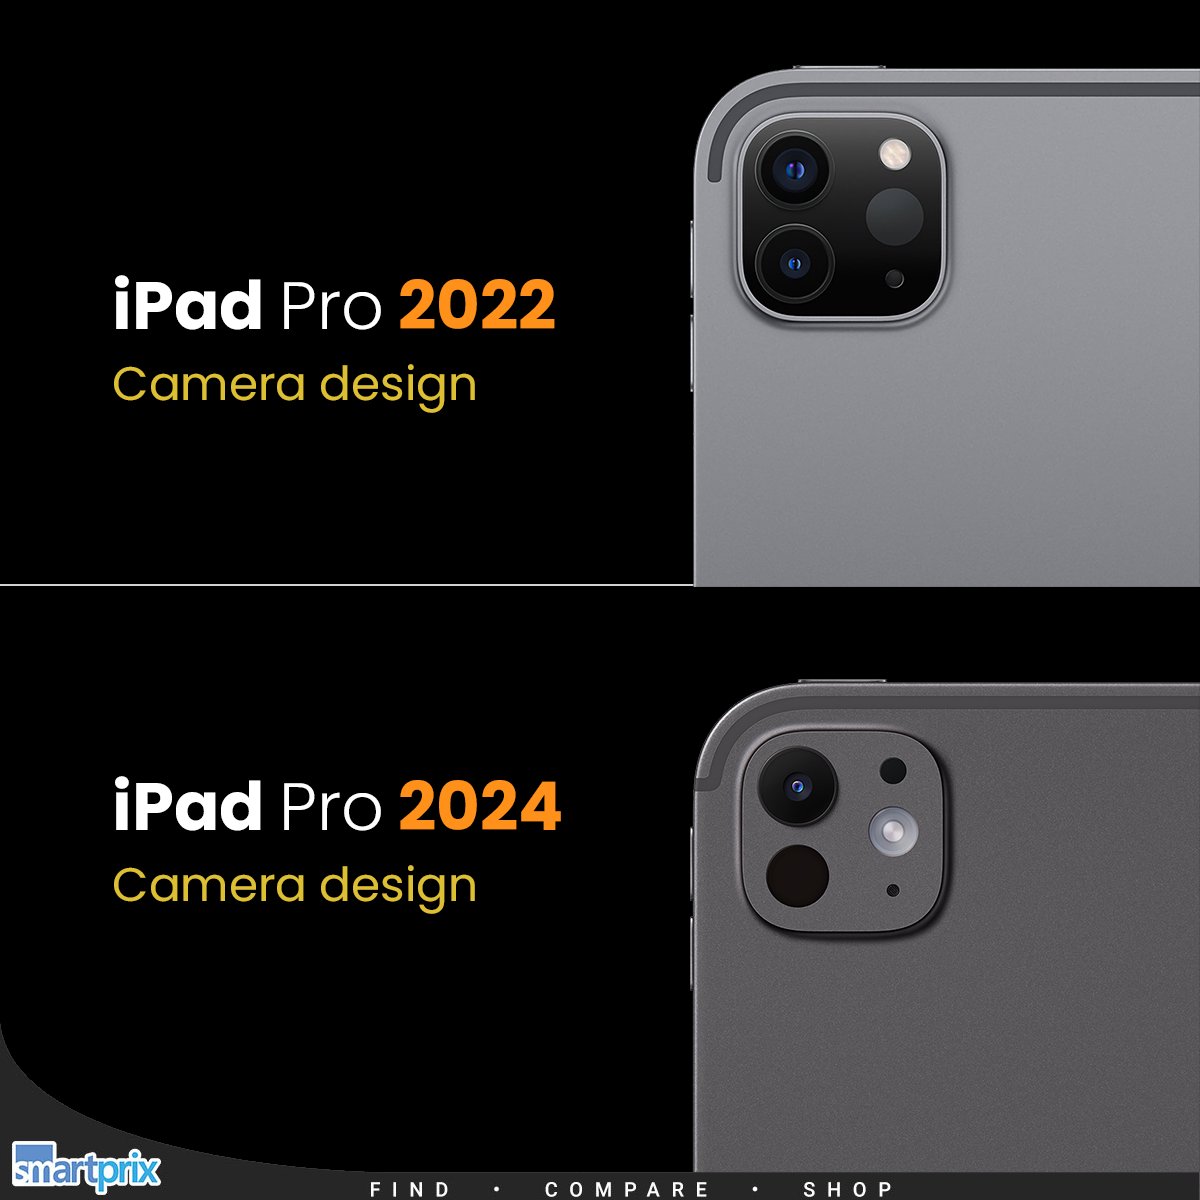 The new iPad Pro loses its ultra-wide camera : Upgrade or Downgrade? #Apple #iPad #iPadPro